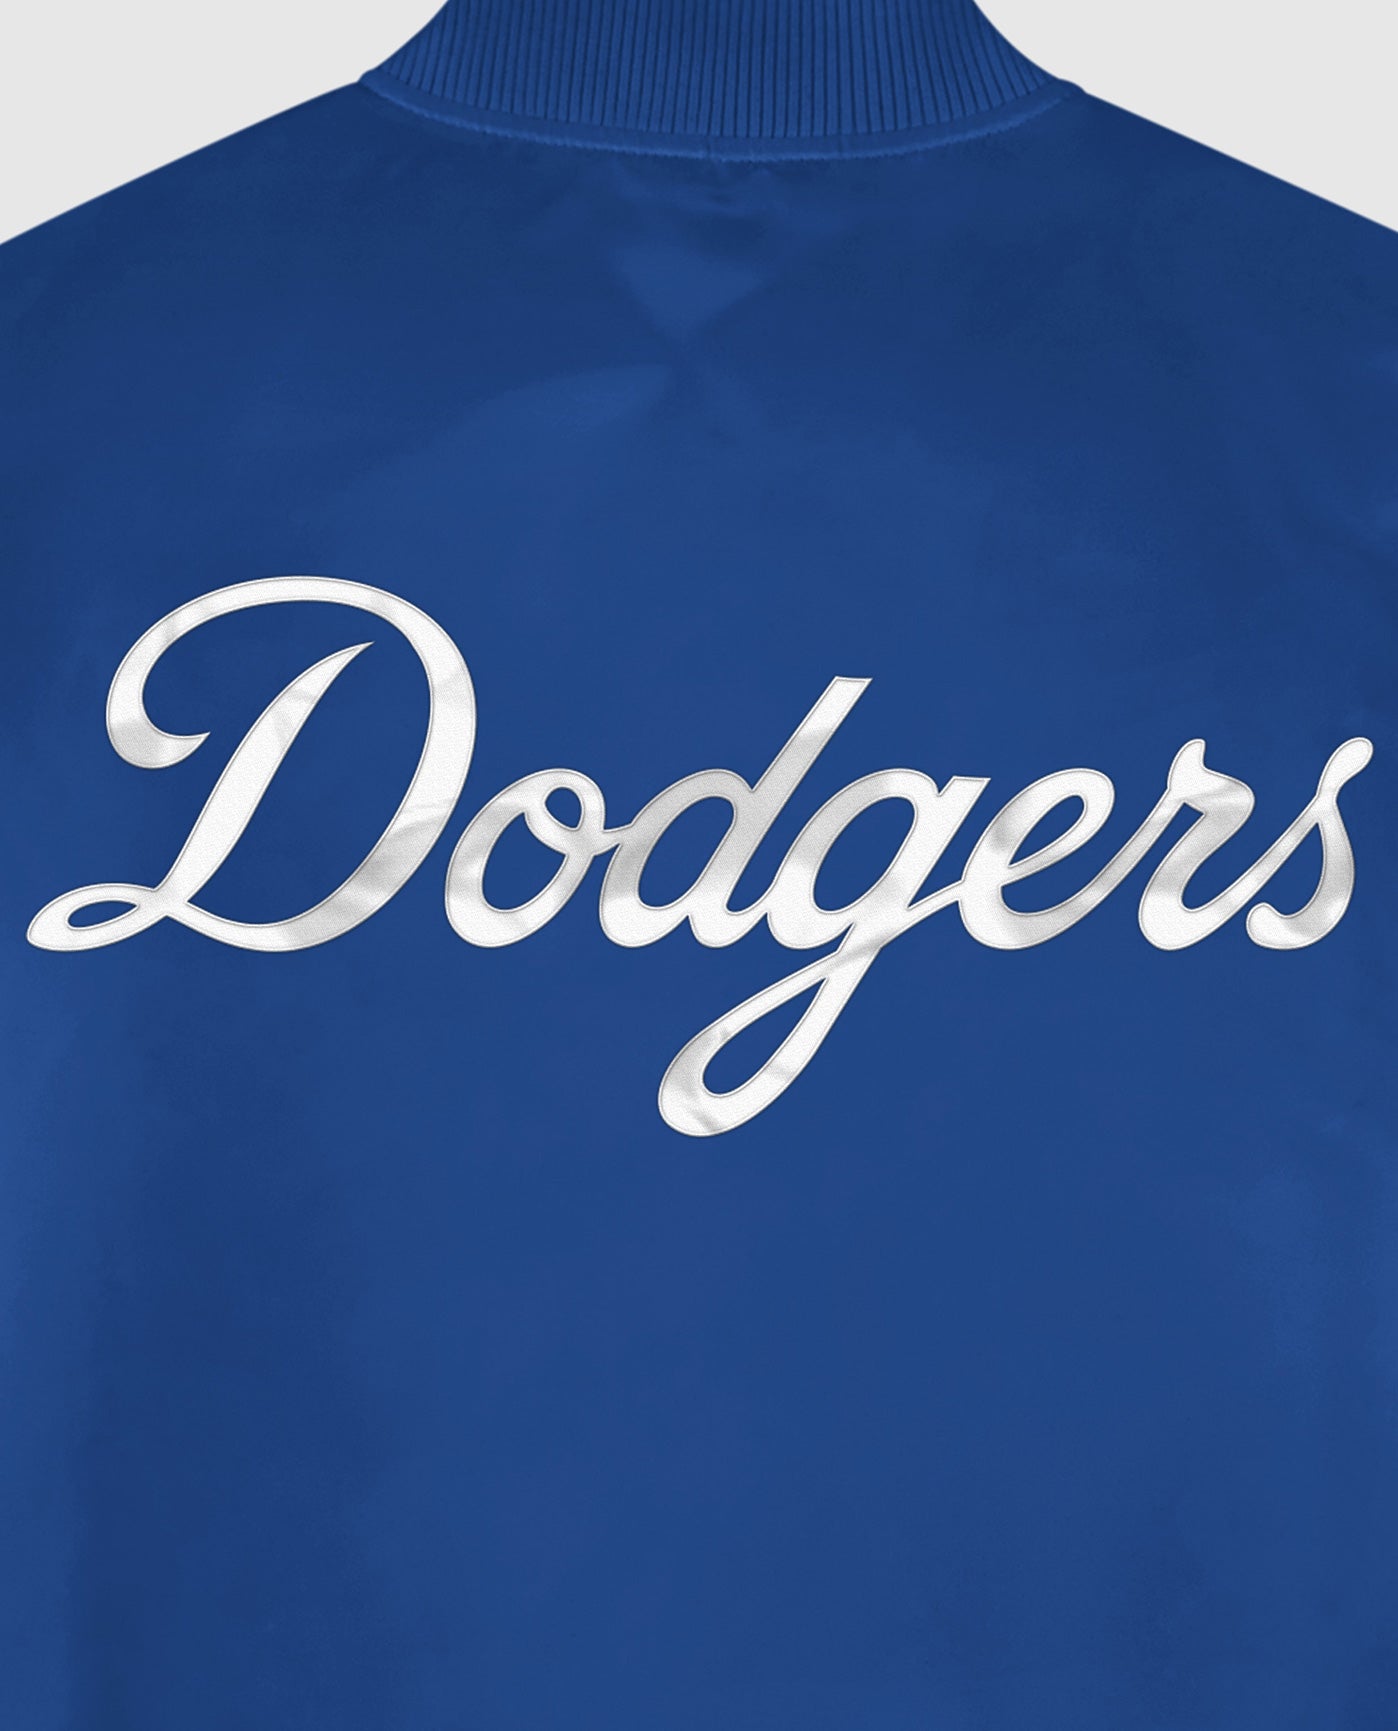 Men's Los Angeles Dodgers Starter Gray Slider Satin Full-Snap Varsity Jacket